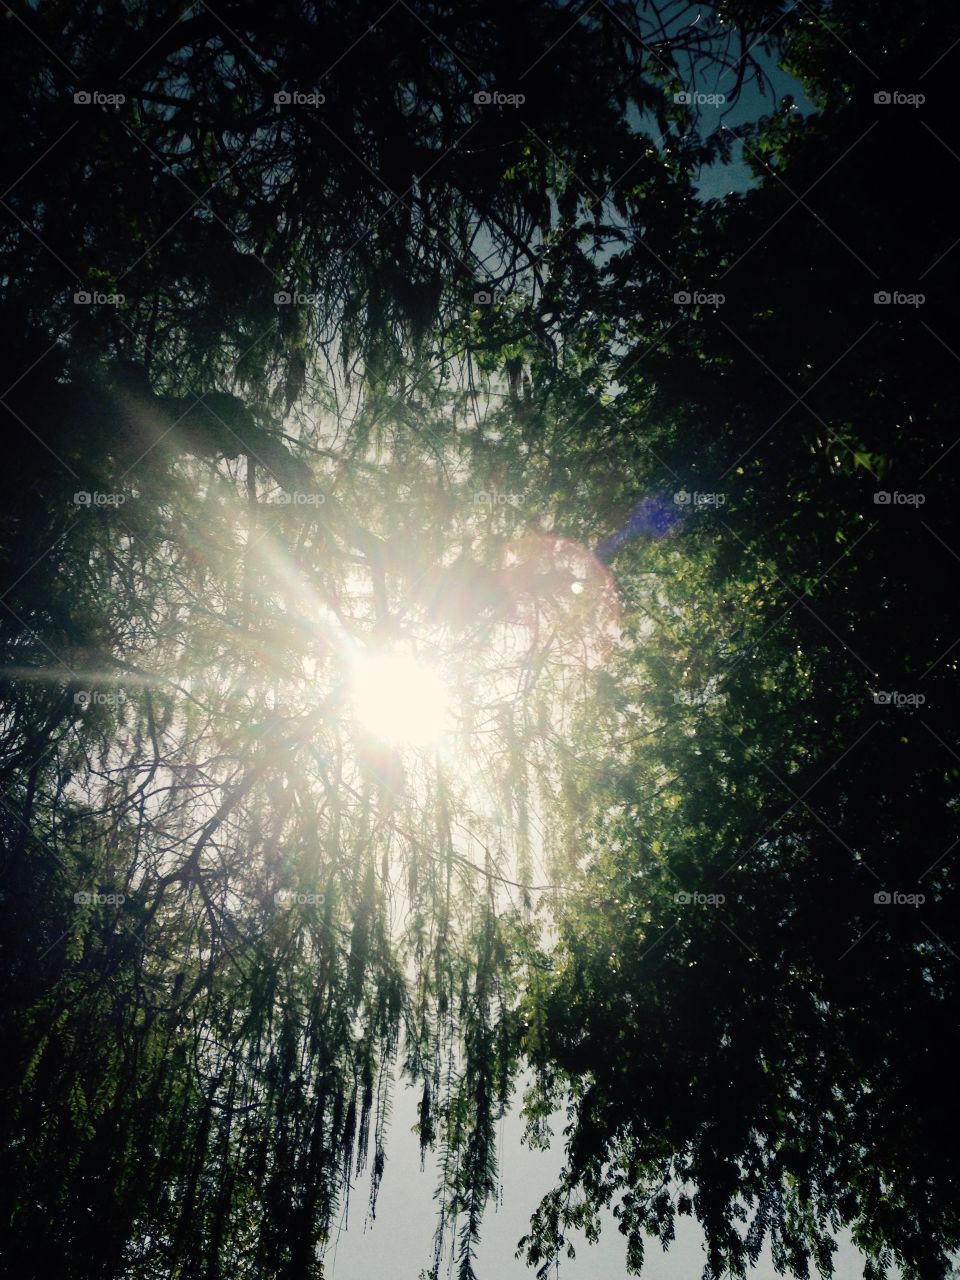 Sunshine bursting through the trees 